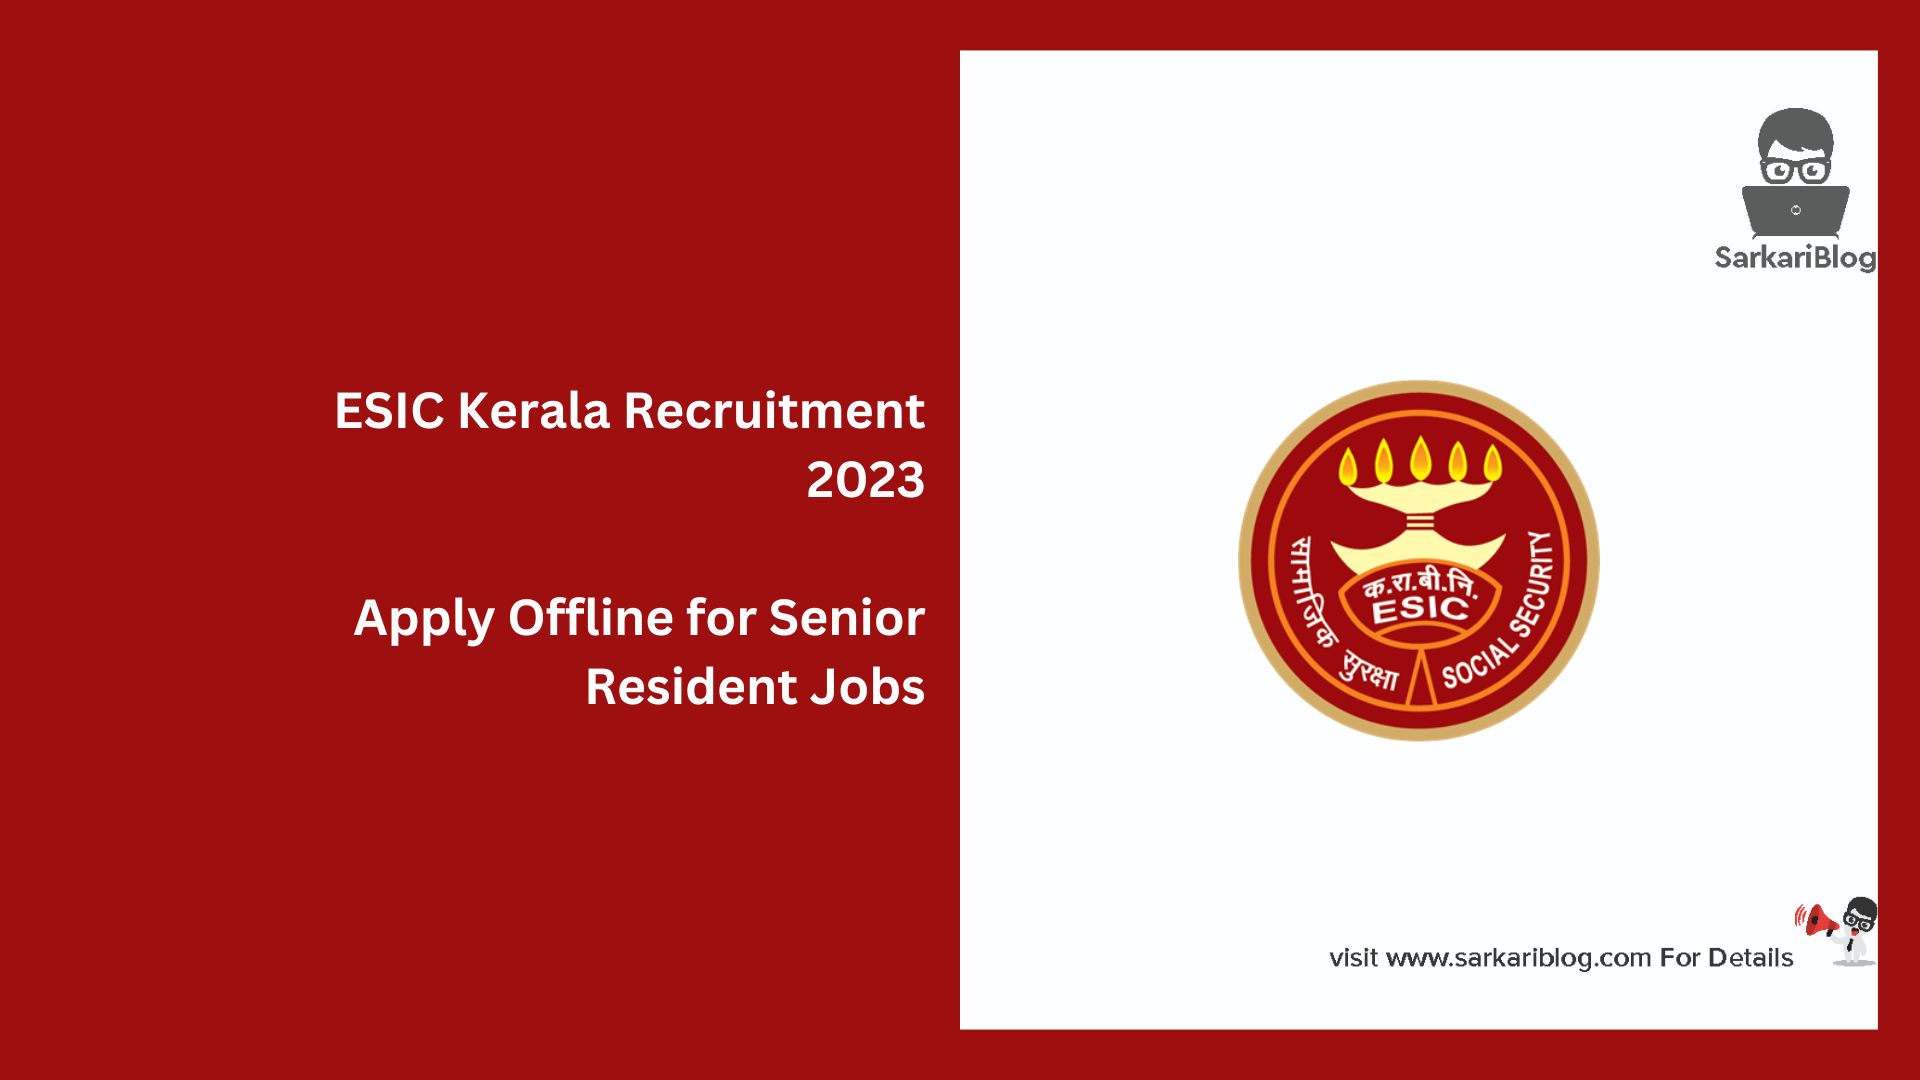 ESIC Kerala Recruitment 2023